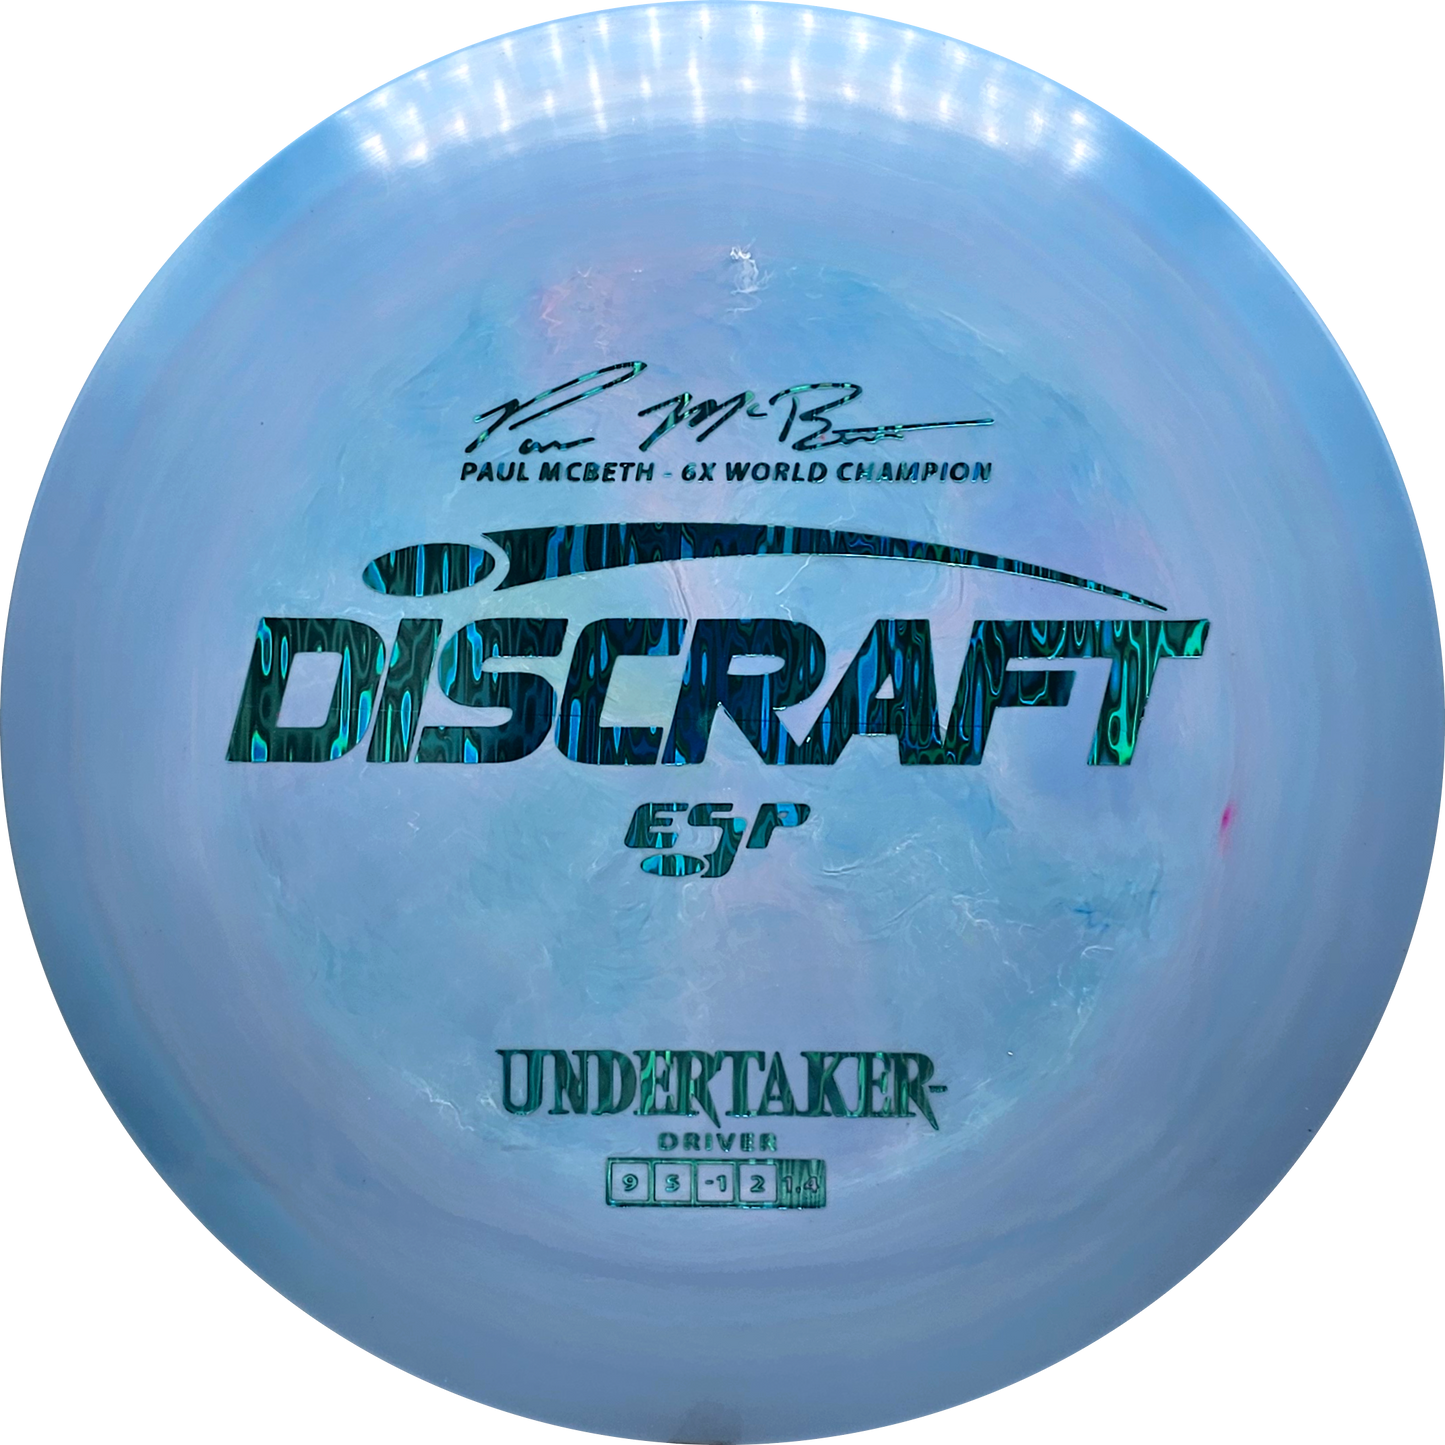 Discraft ESP Undertaker - Paul McBeth 6X Signature Series